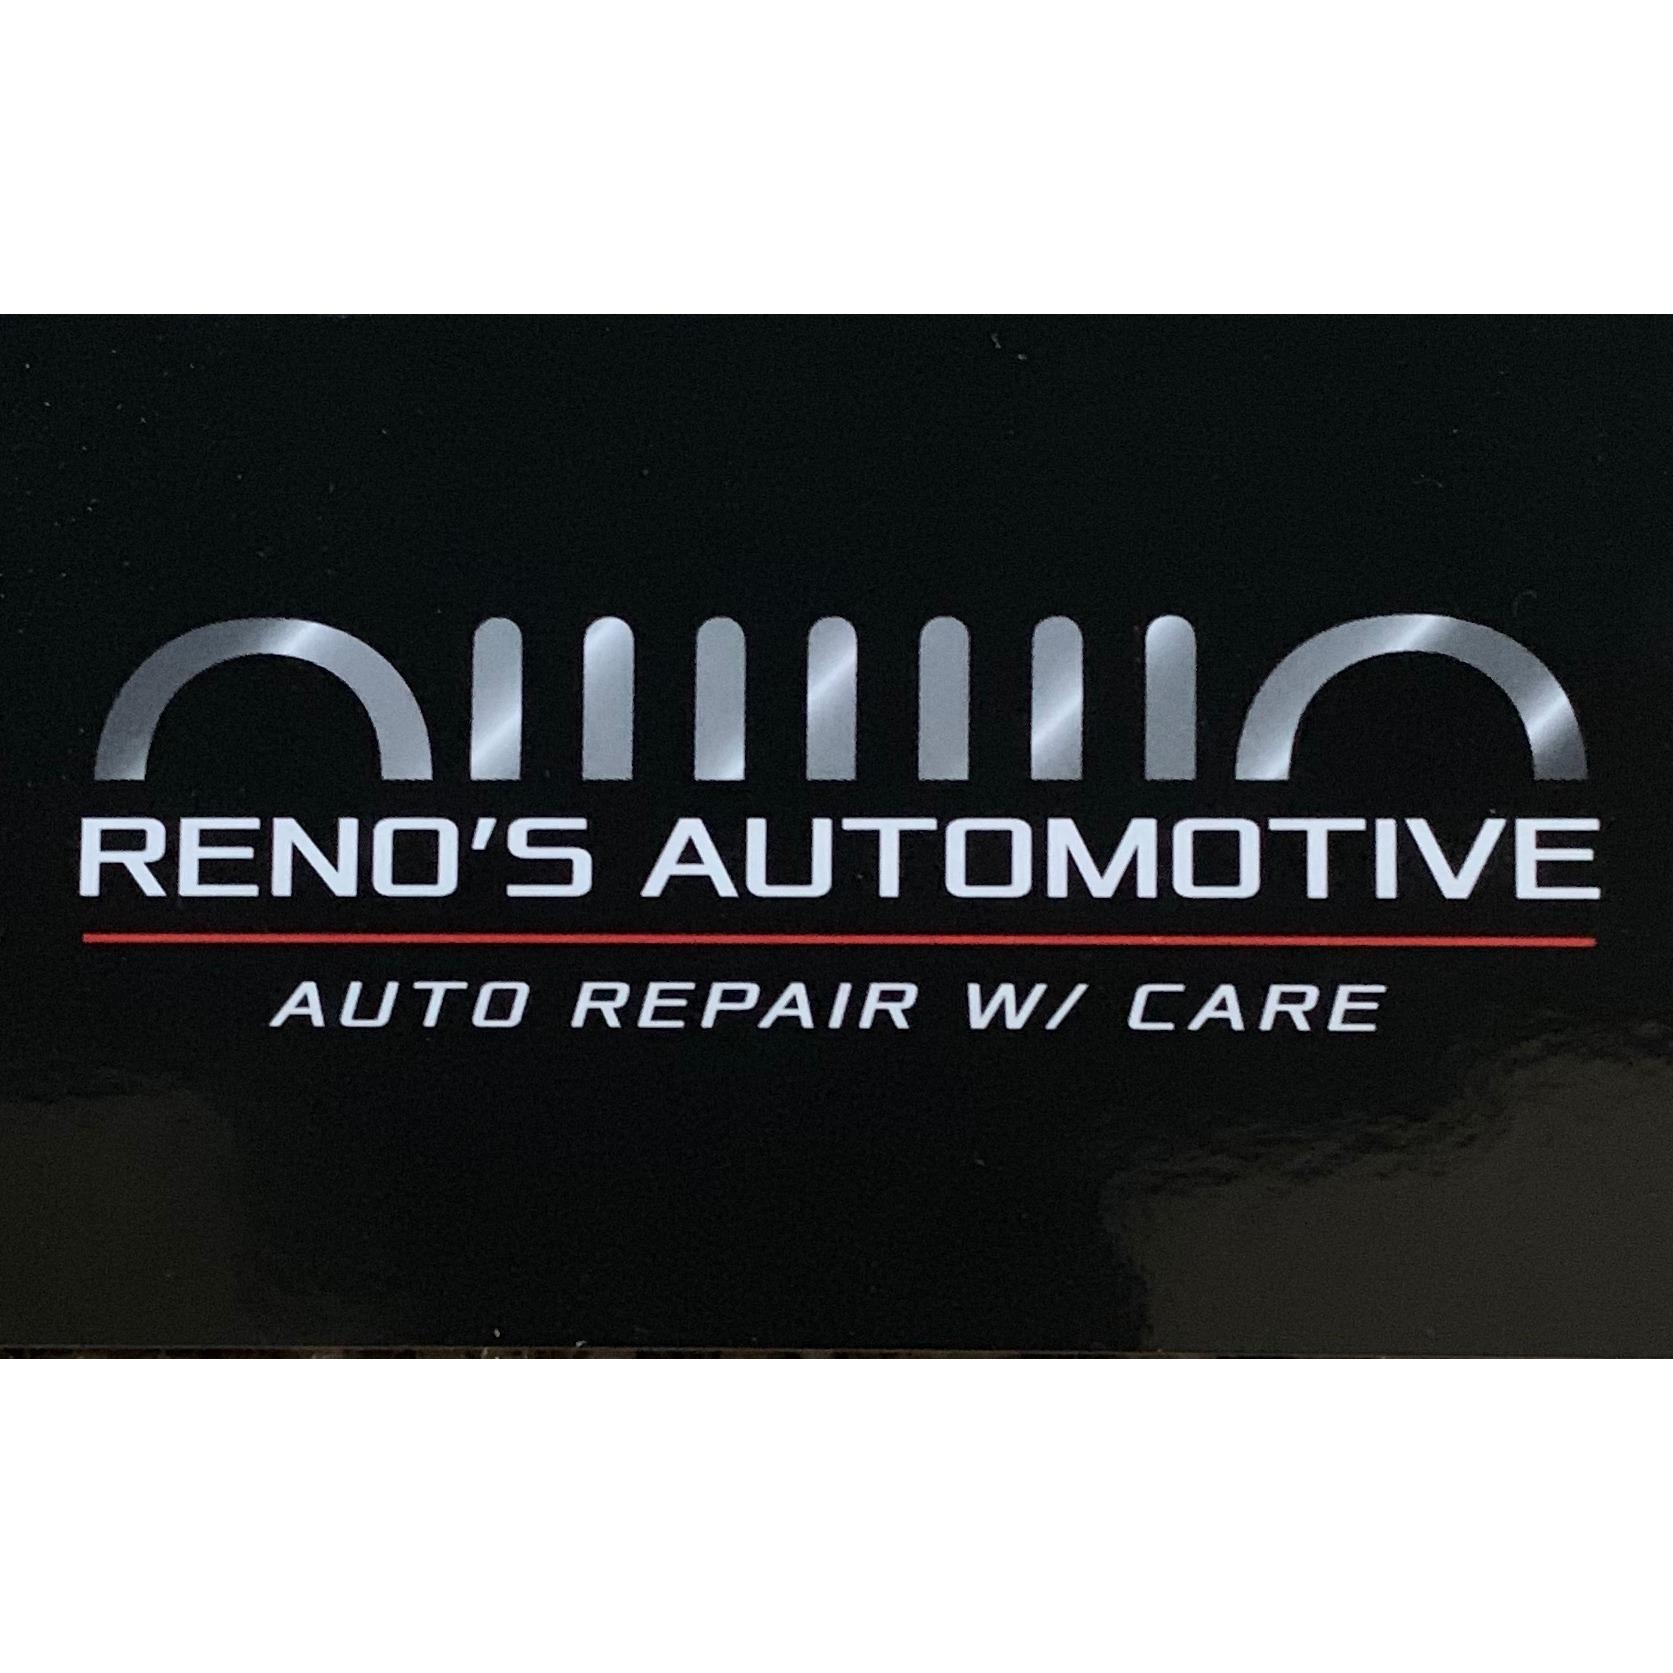 Reno's Automotive Photo